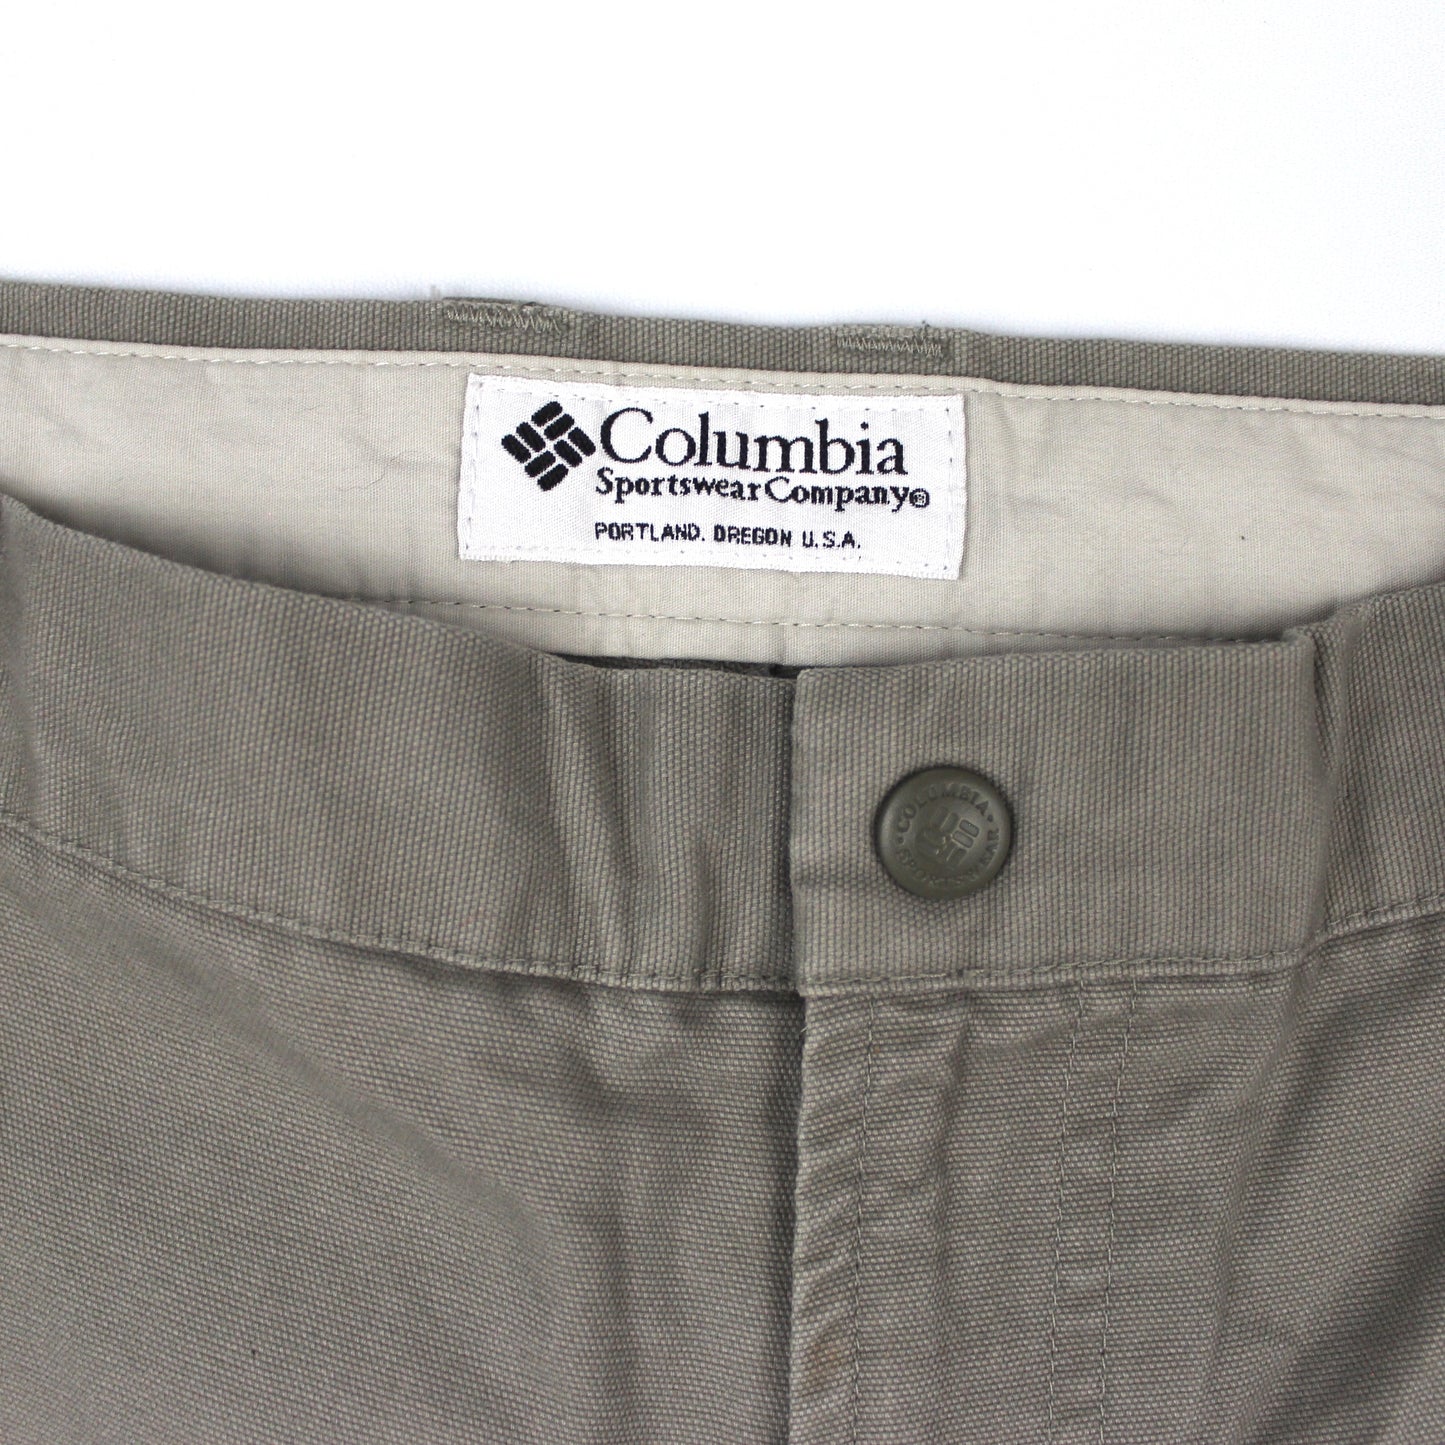 Columbia Sportswear Shorts (38)